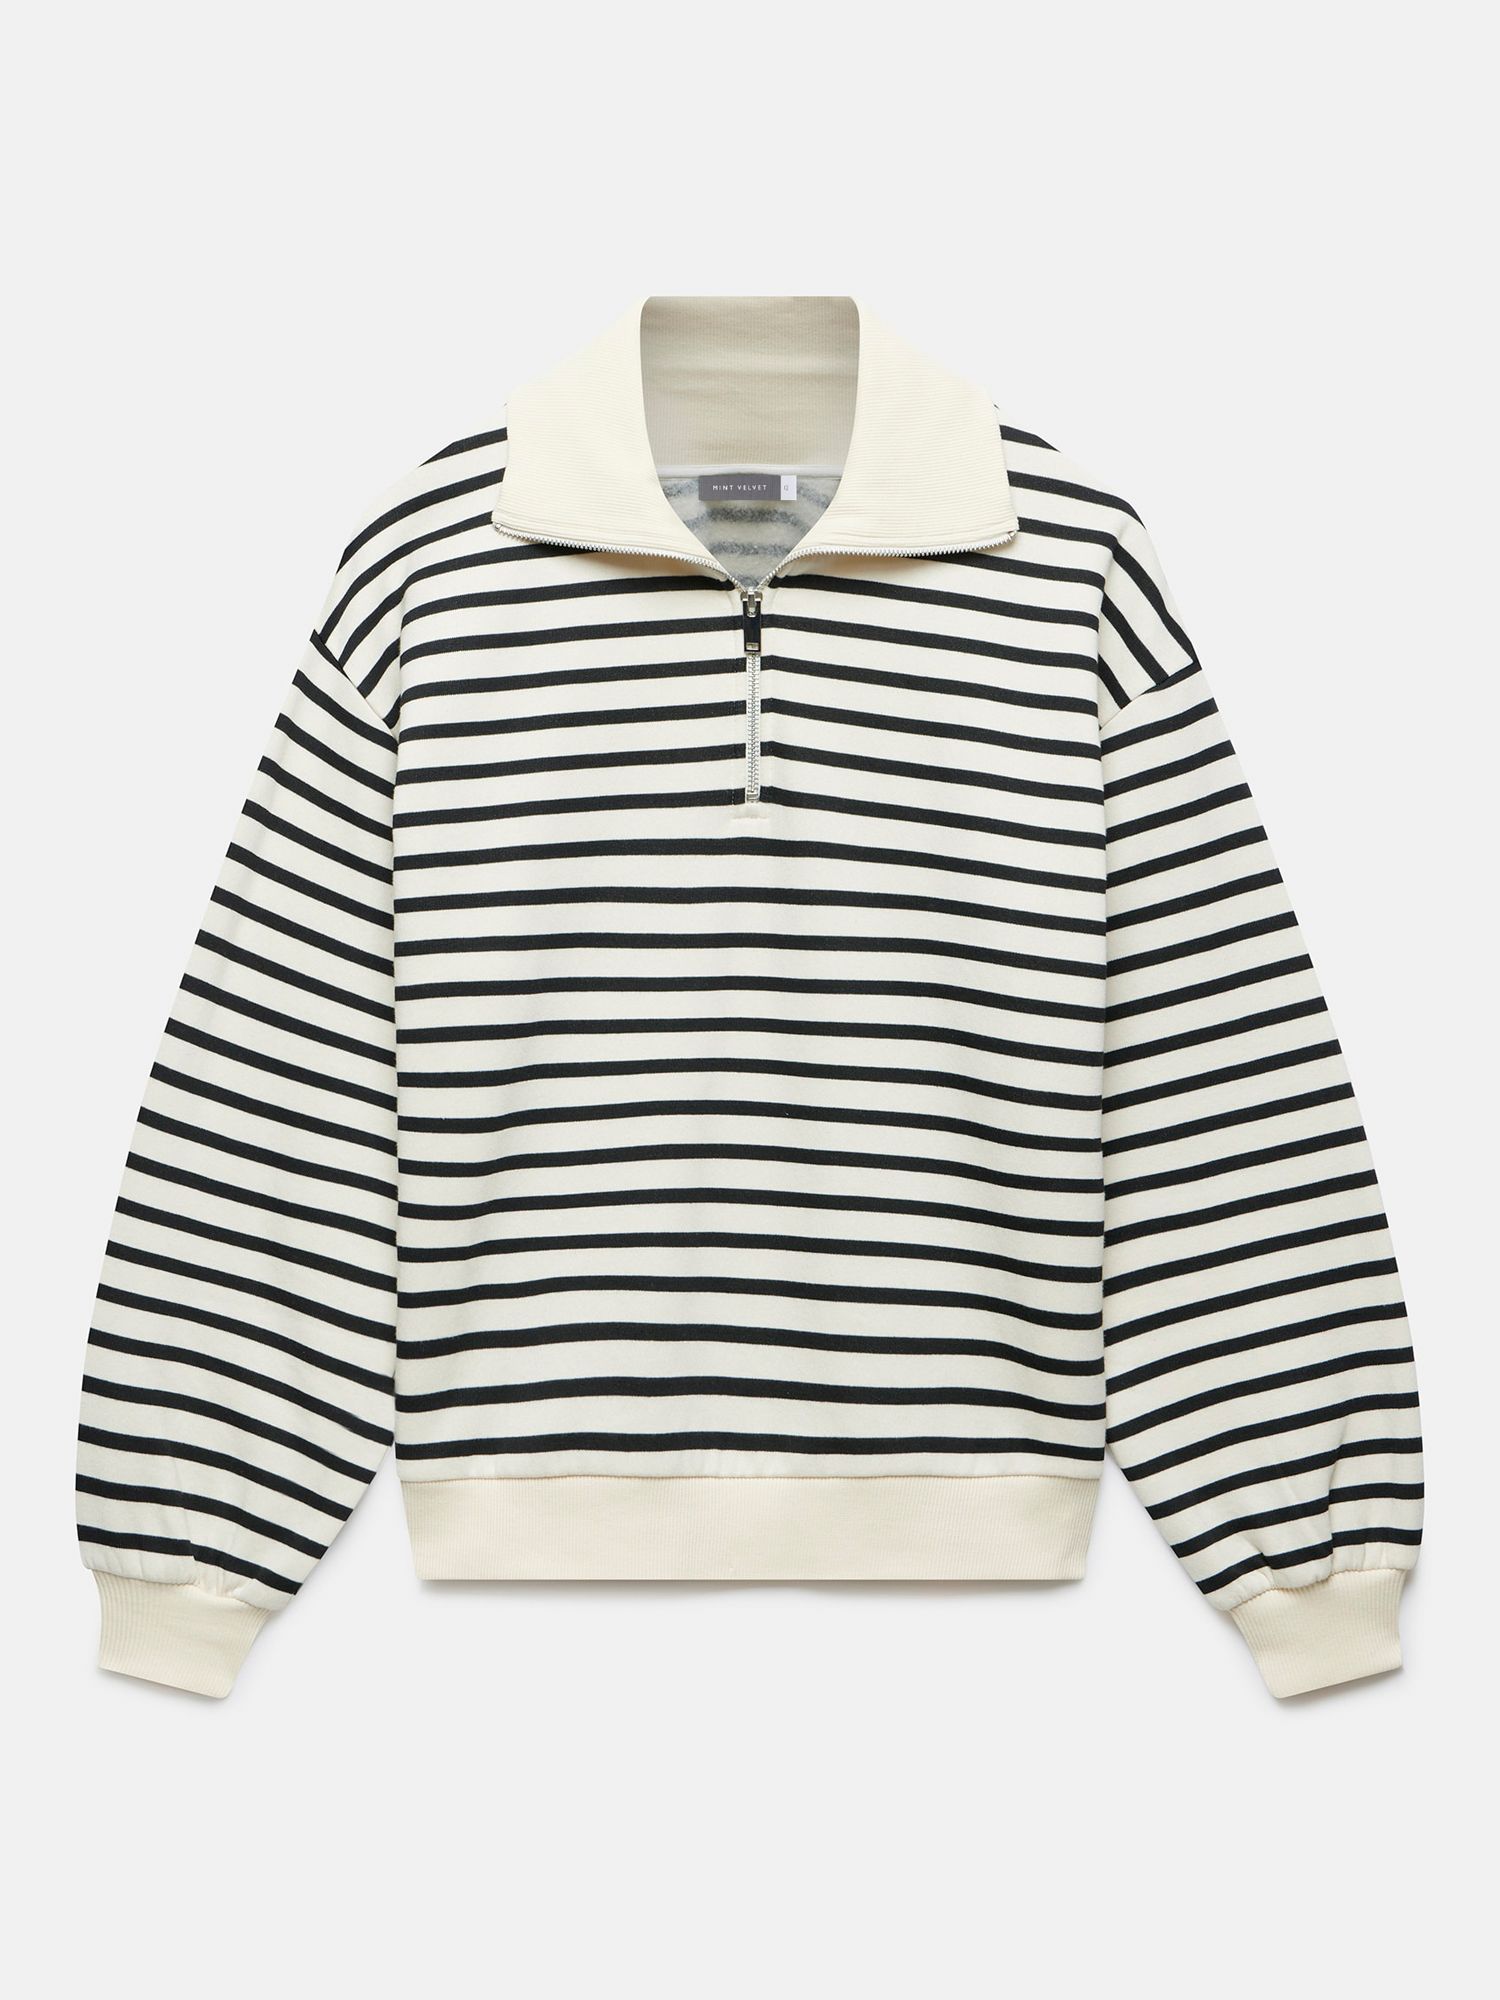 Mint Velvet Striped Cotton Half Zip Sweatshirt, Cream/Black, L